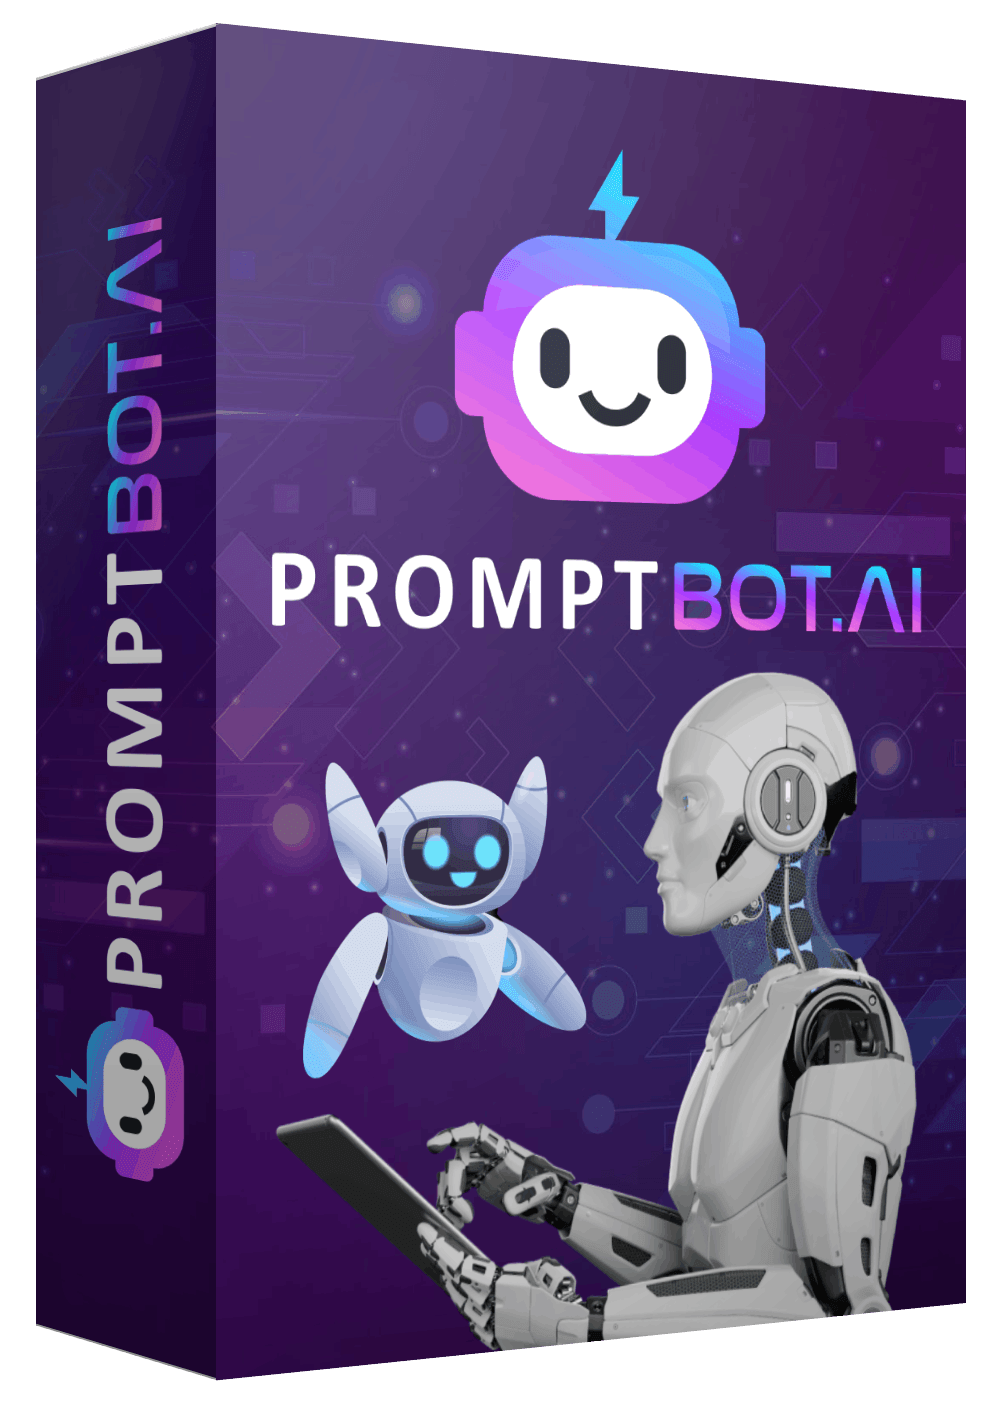 PromptBot AI